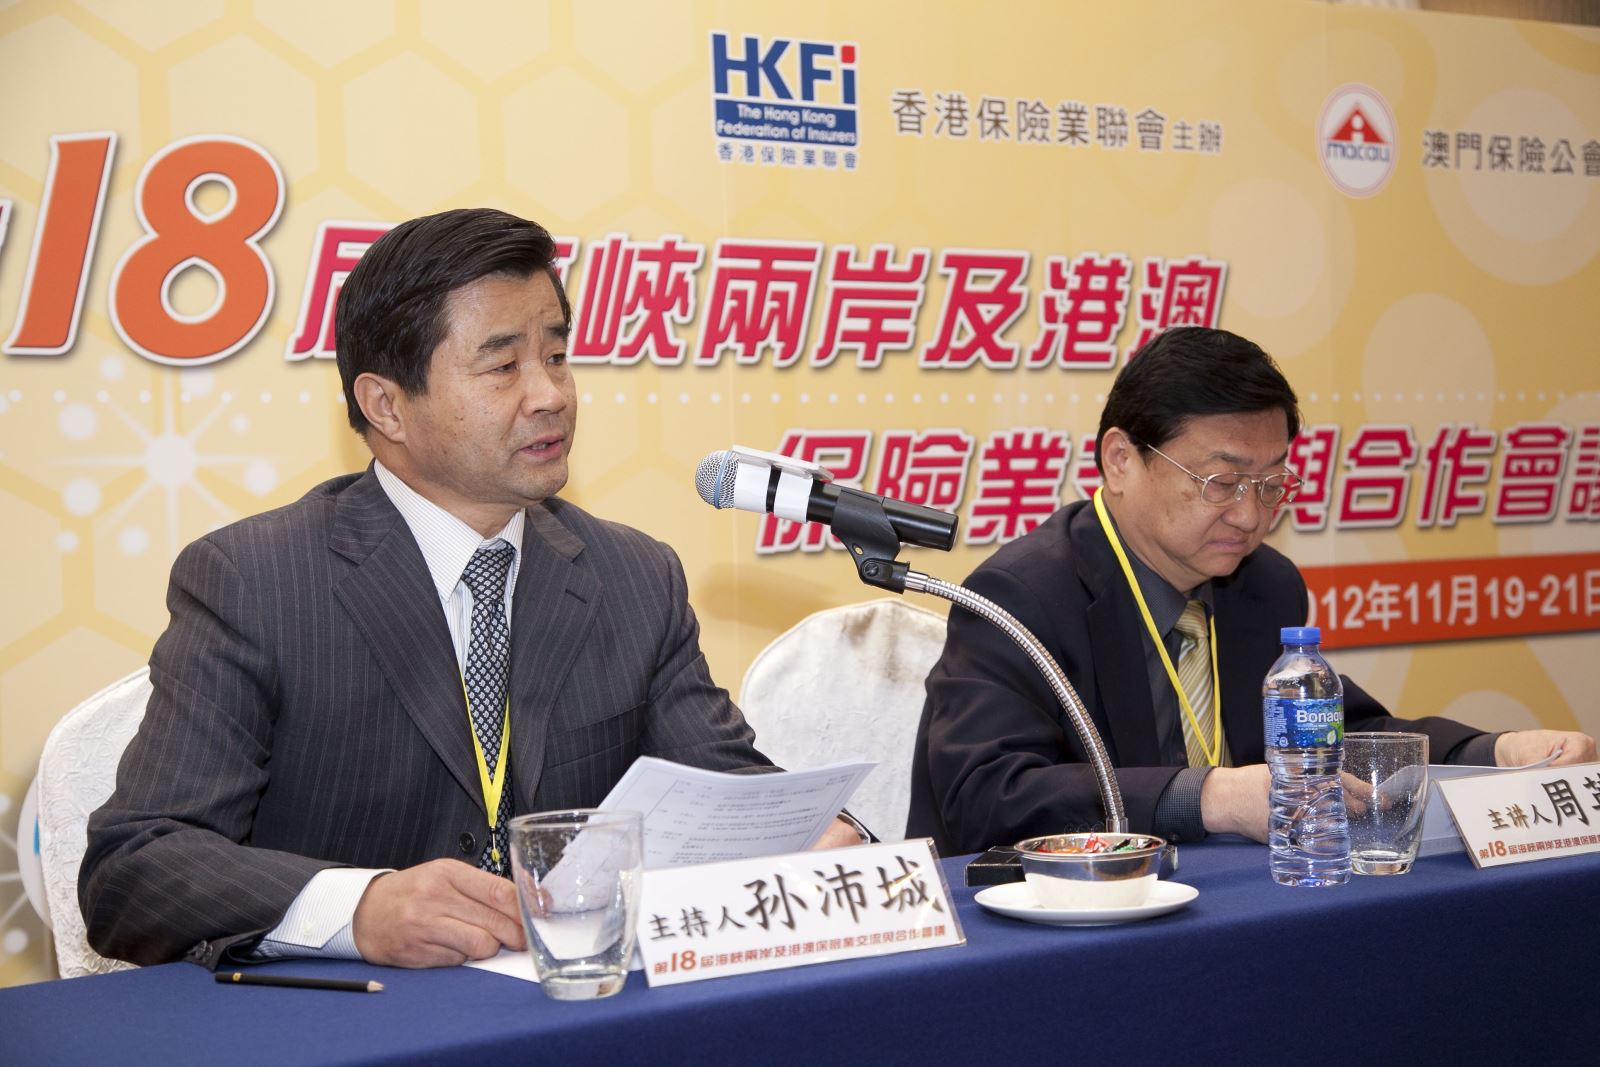 18th Cross-strait, Hong Kong & Macau Insurance Business Conference - Life Insurance Session